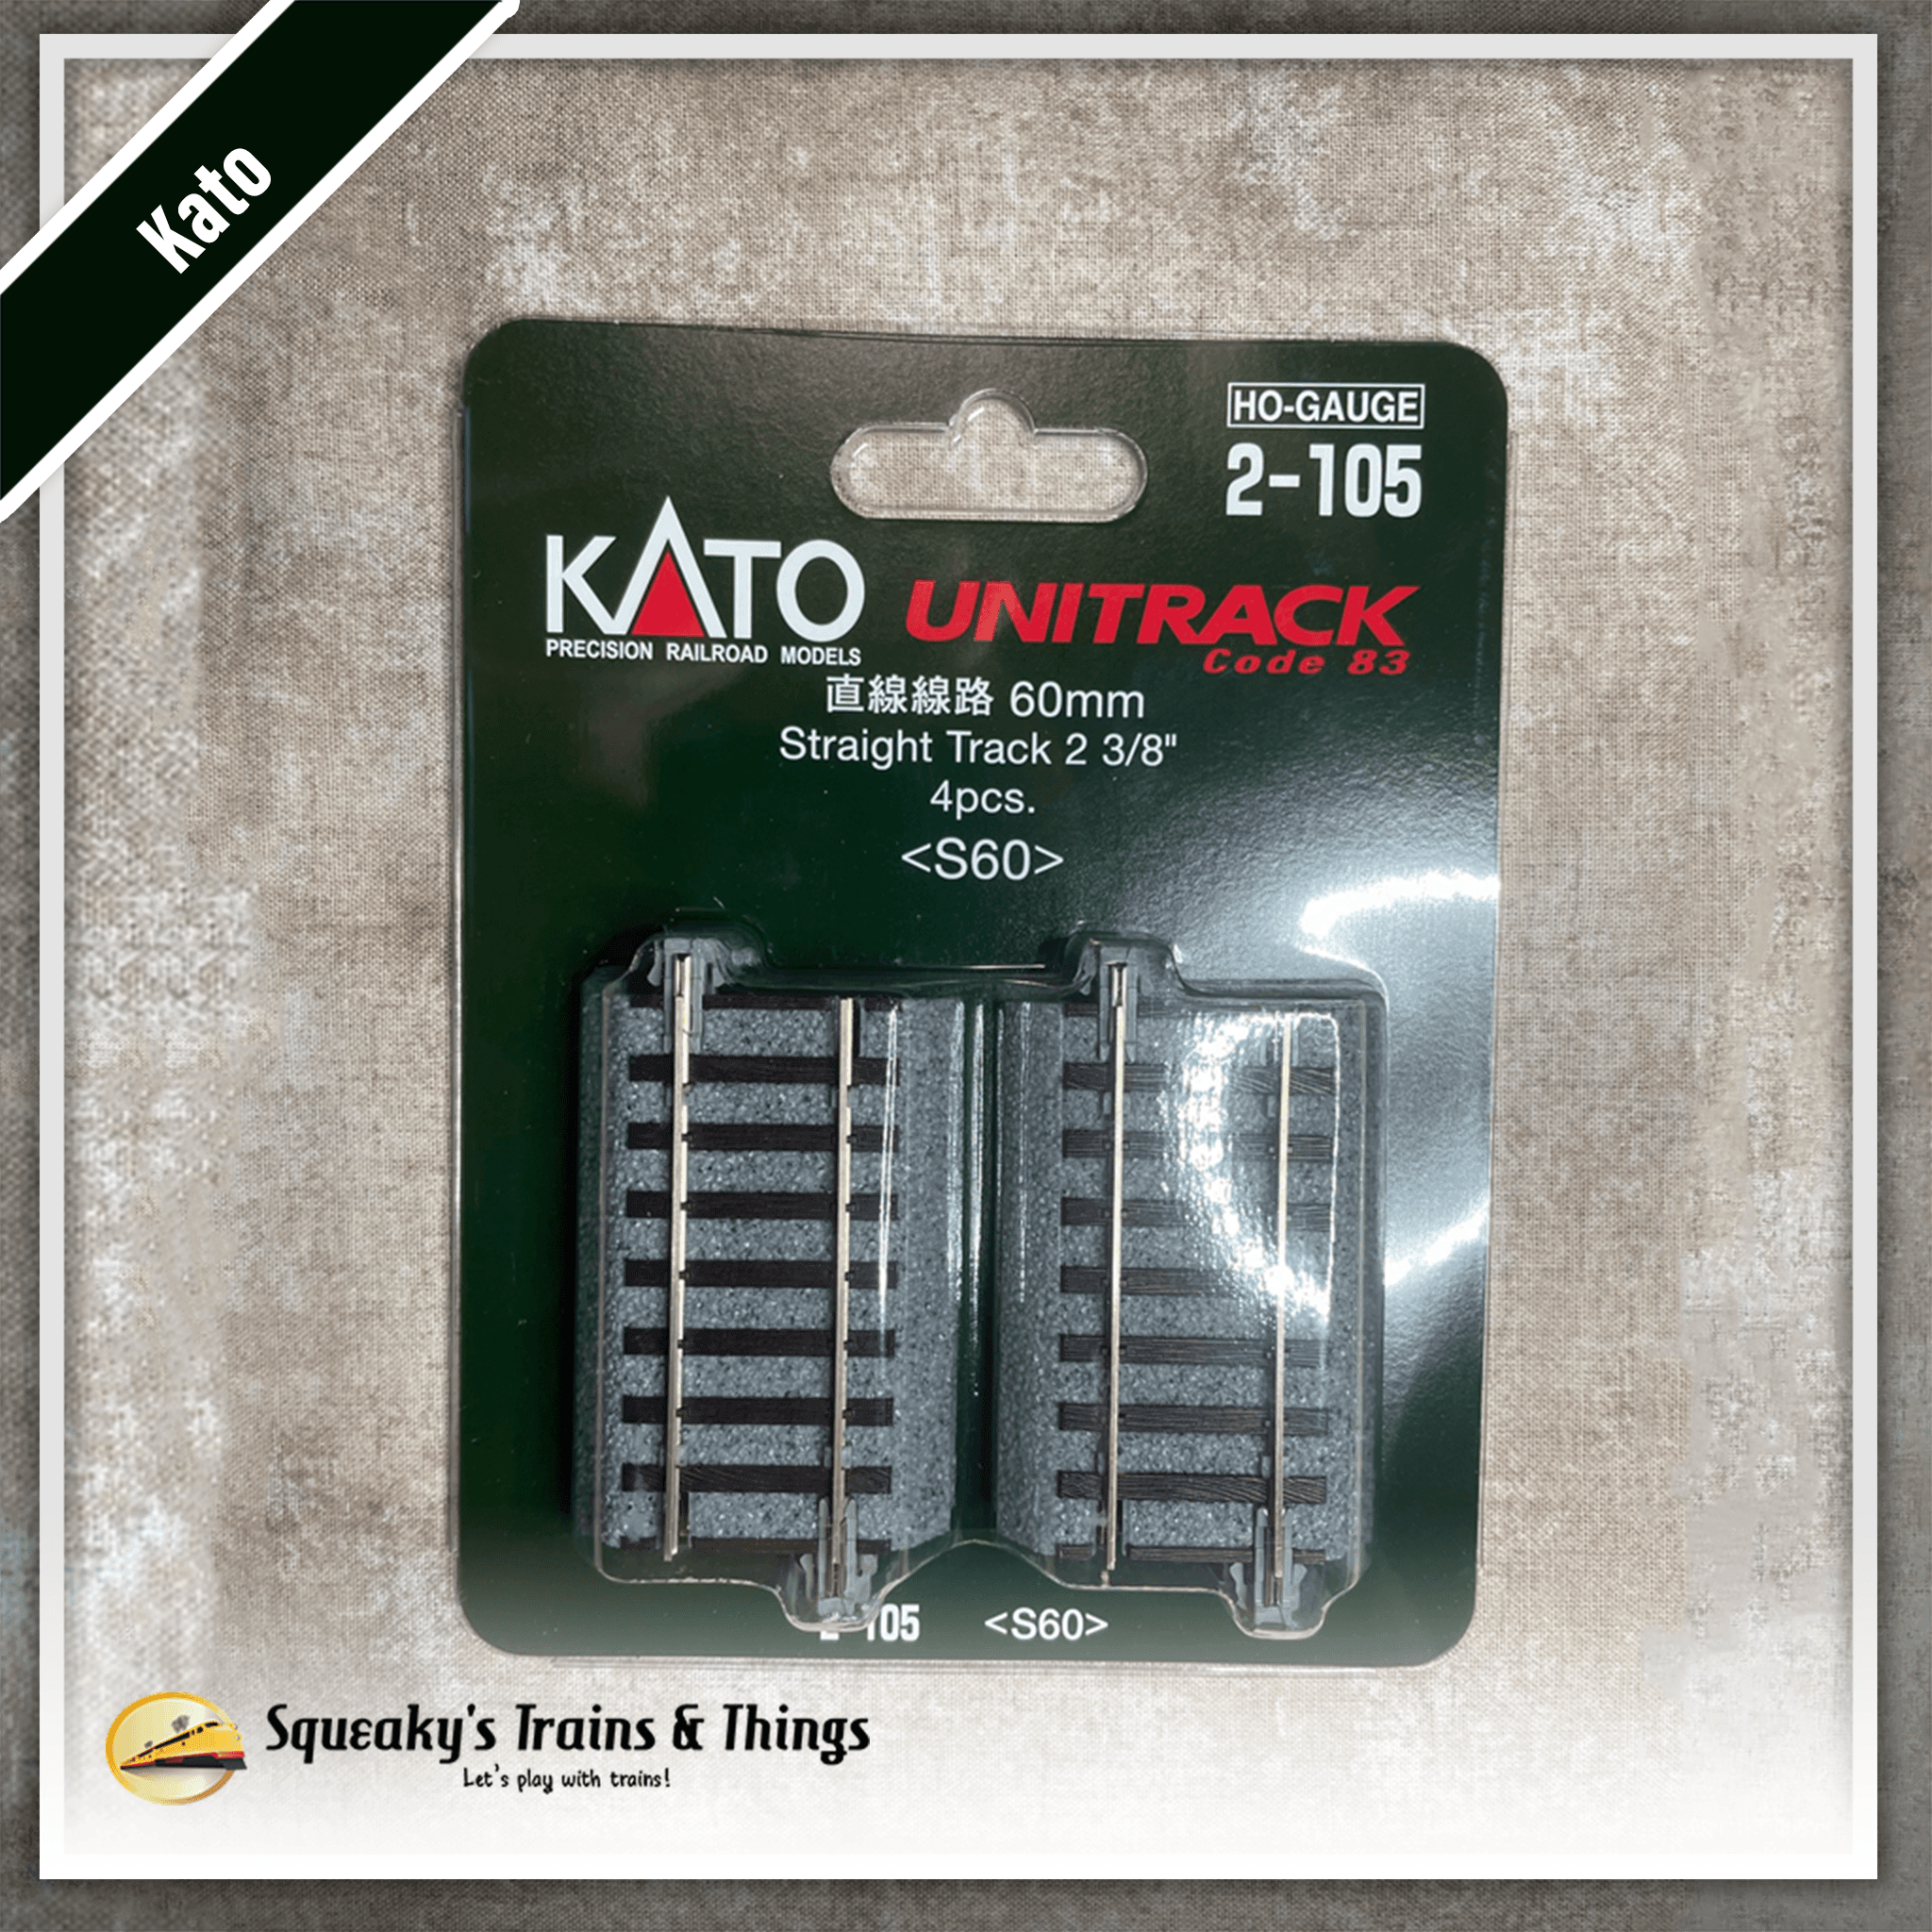 Kato 2105 | Unitrack 60mm (2 3/8") Straight Track [4 pack] | HO Scale